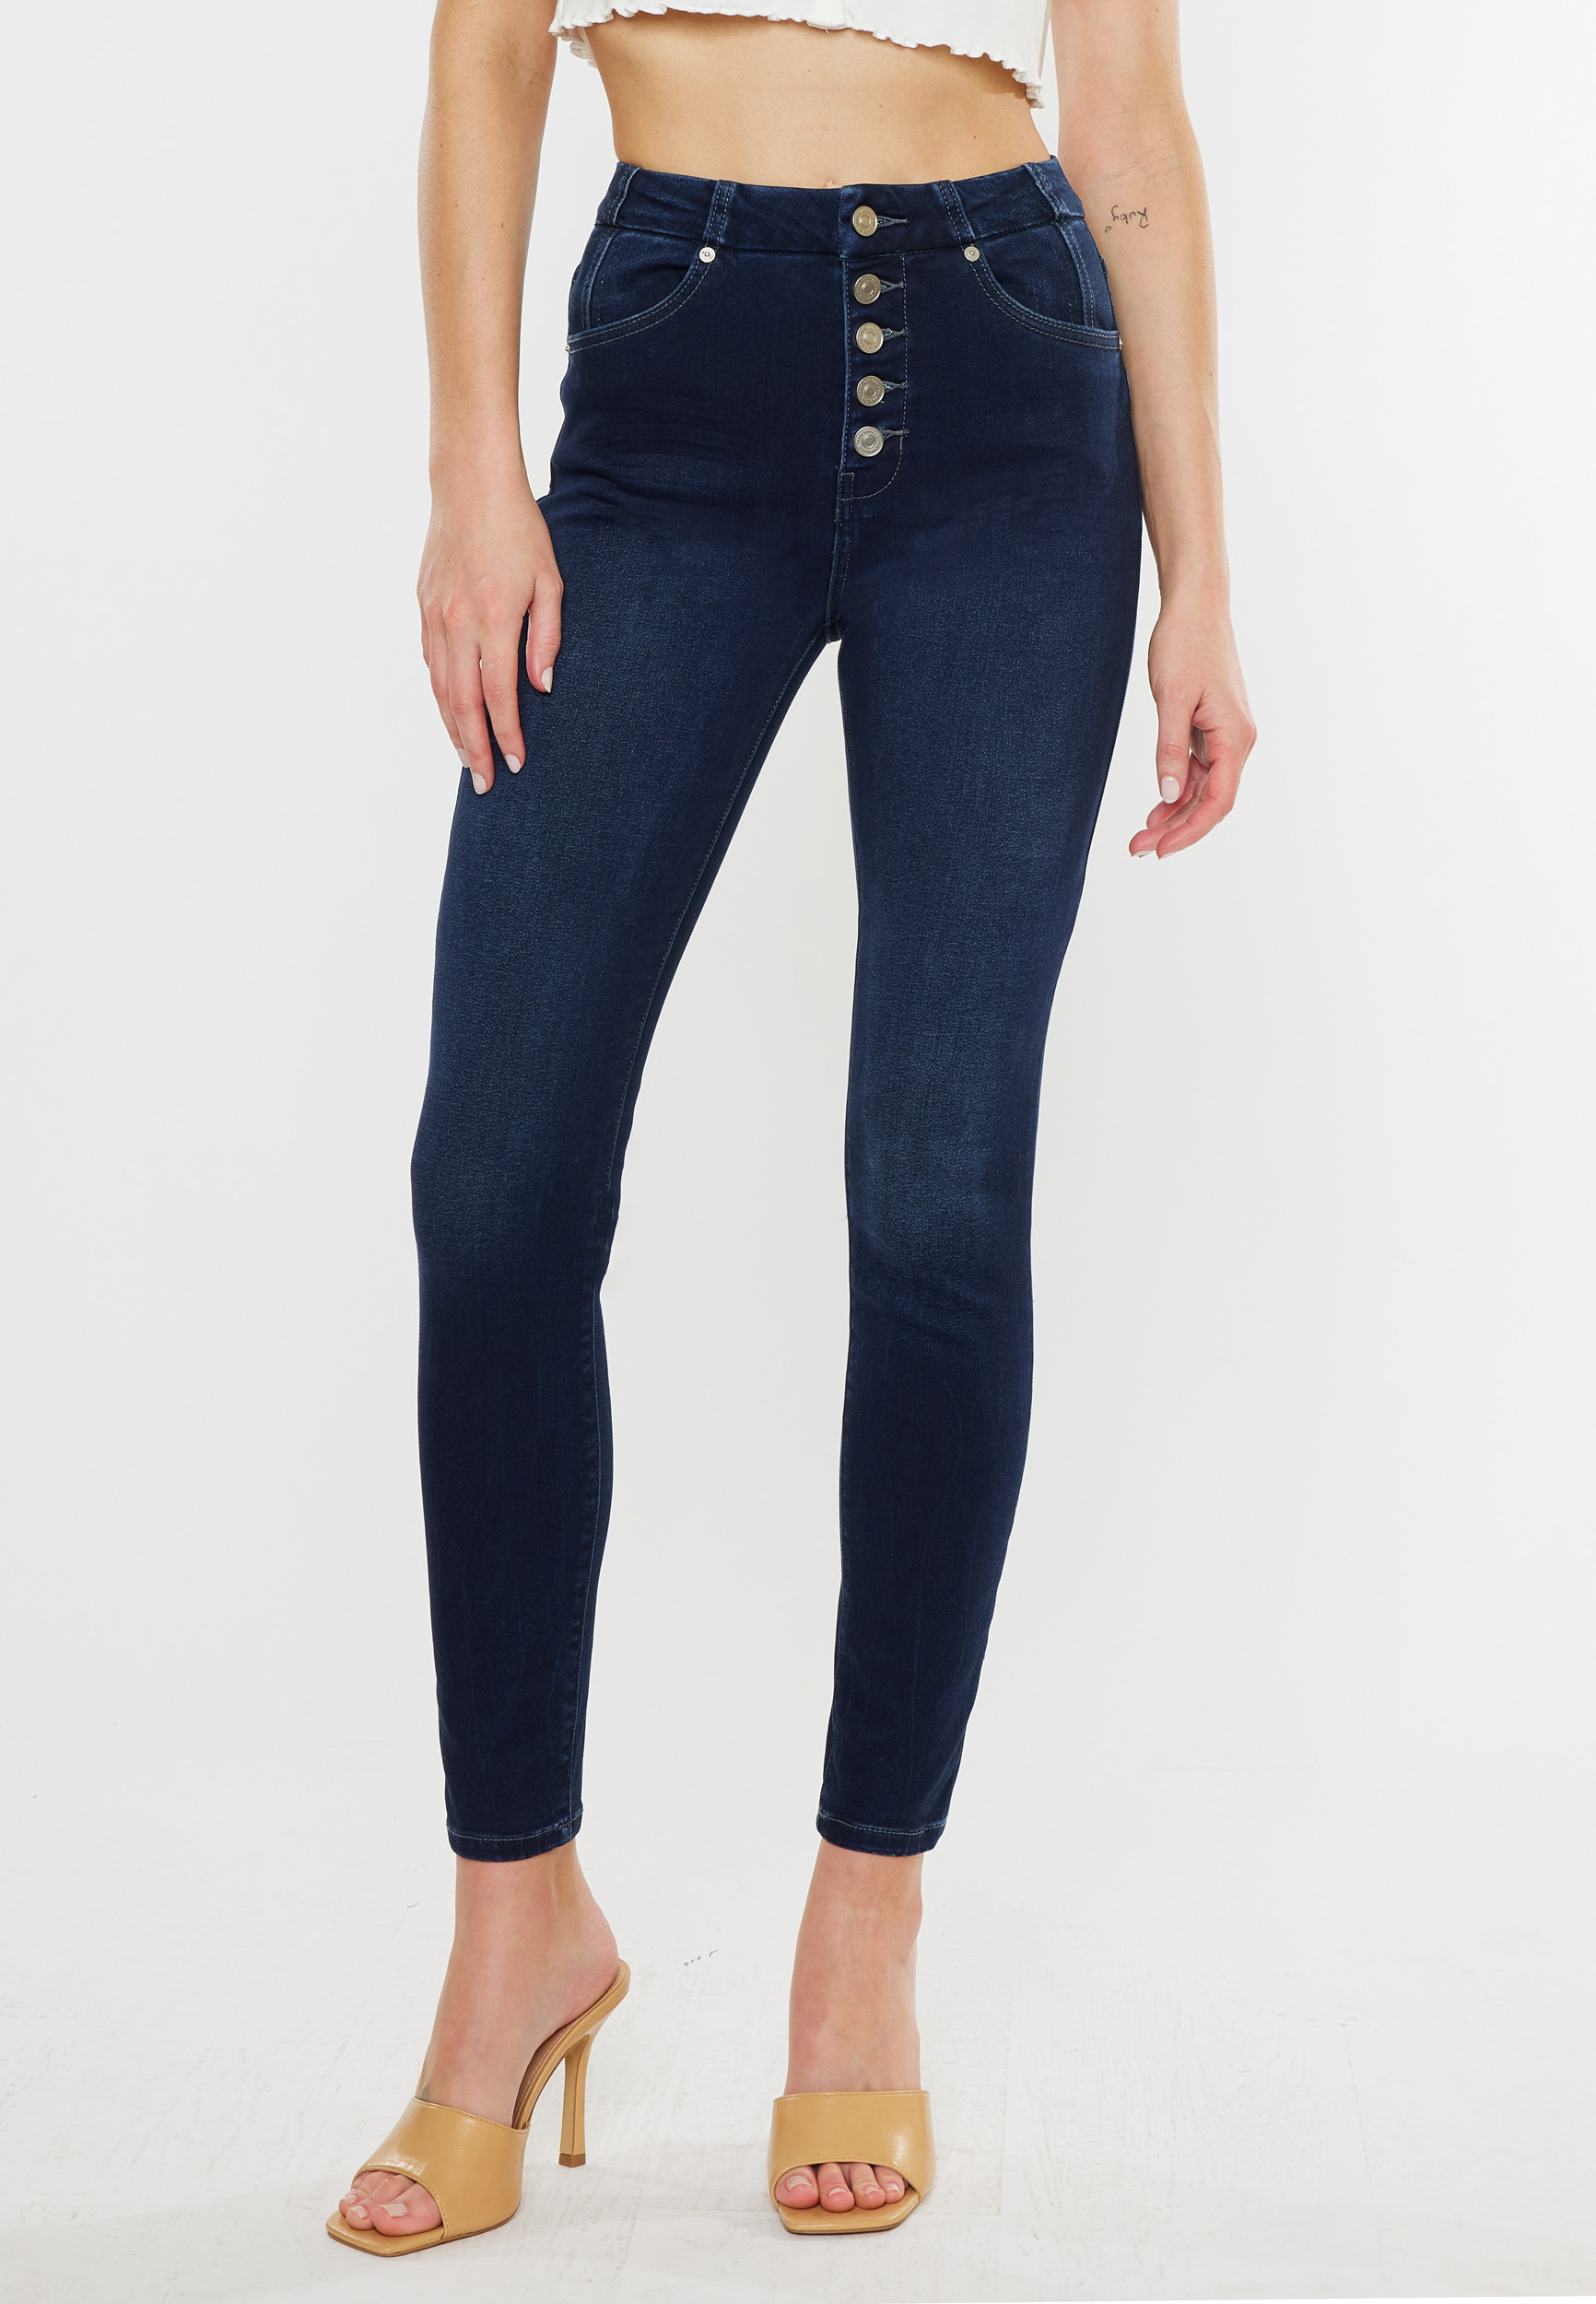 Shop Women's Skinny Jeans, Slimming Denim